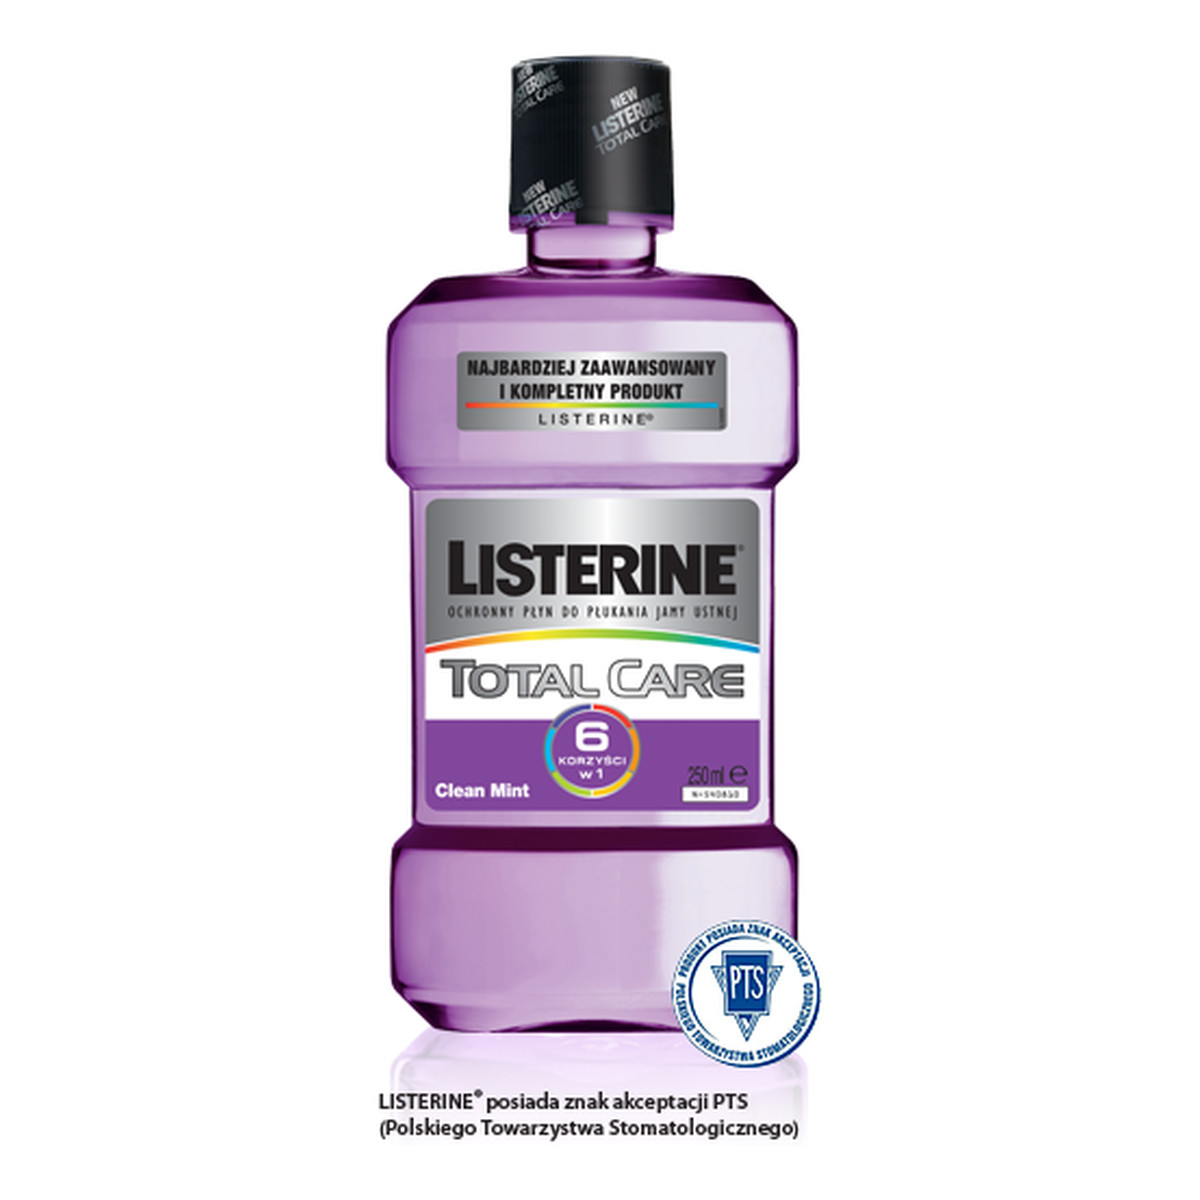 Listerine Total Care Płyn do płukania jamy ustnej (5+1) 500ml